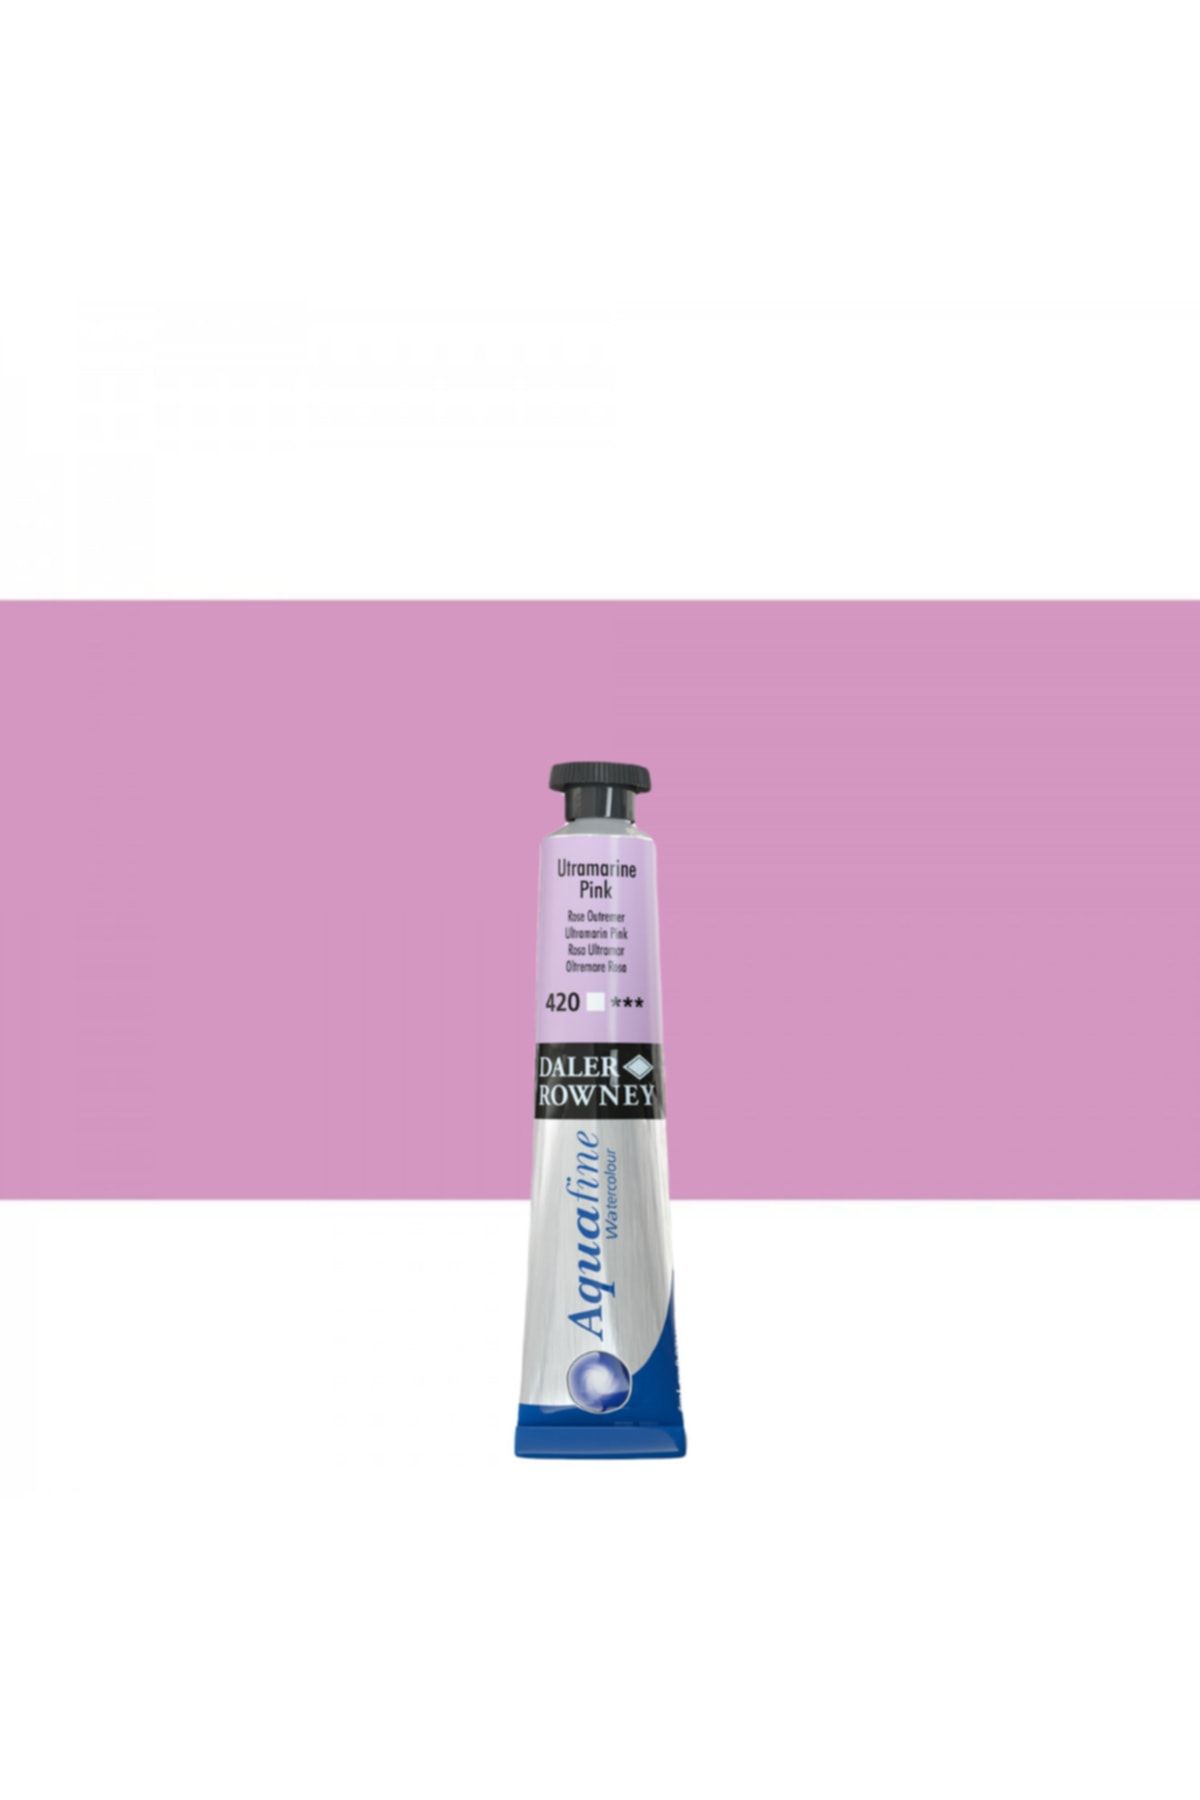 Daler Rowney Aquafine Tüp Suluboya 8ml N:420 Ultramarine Pink